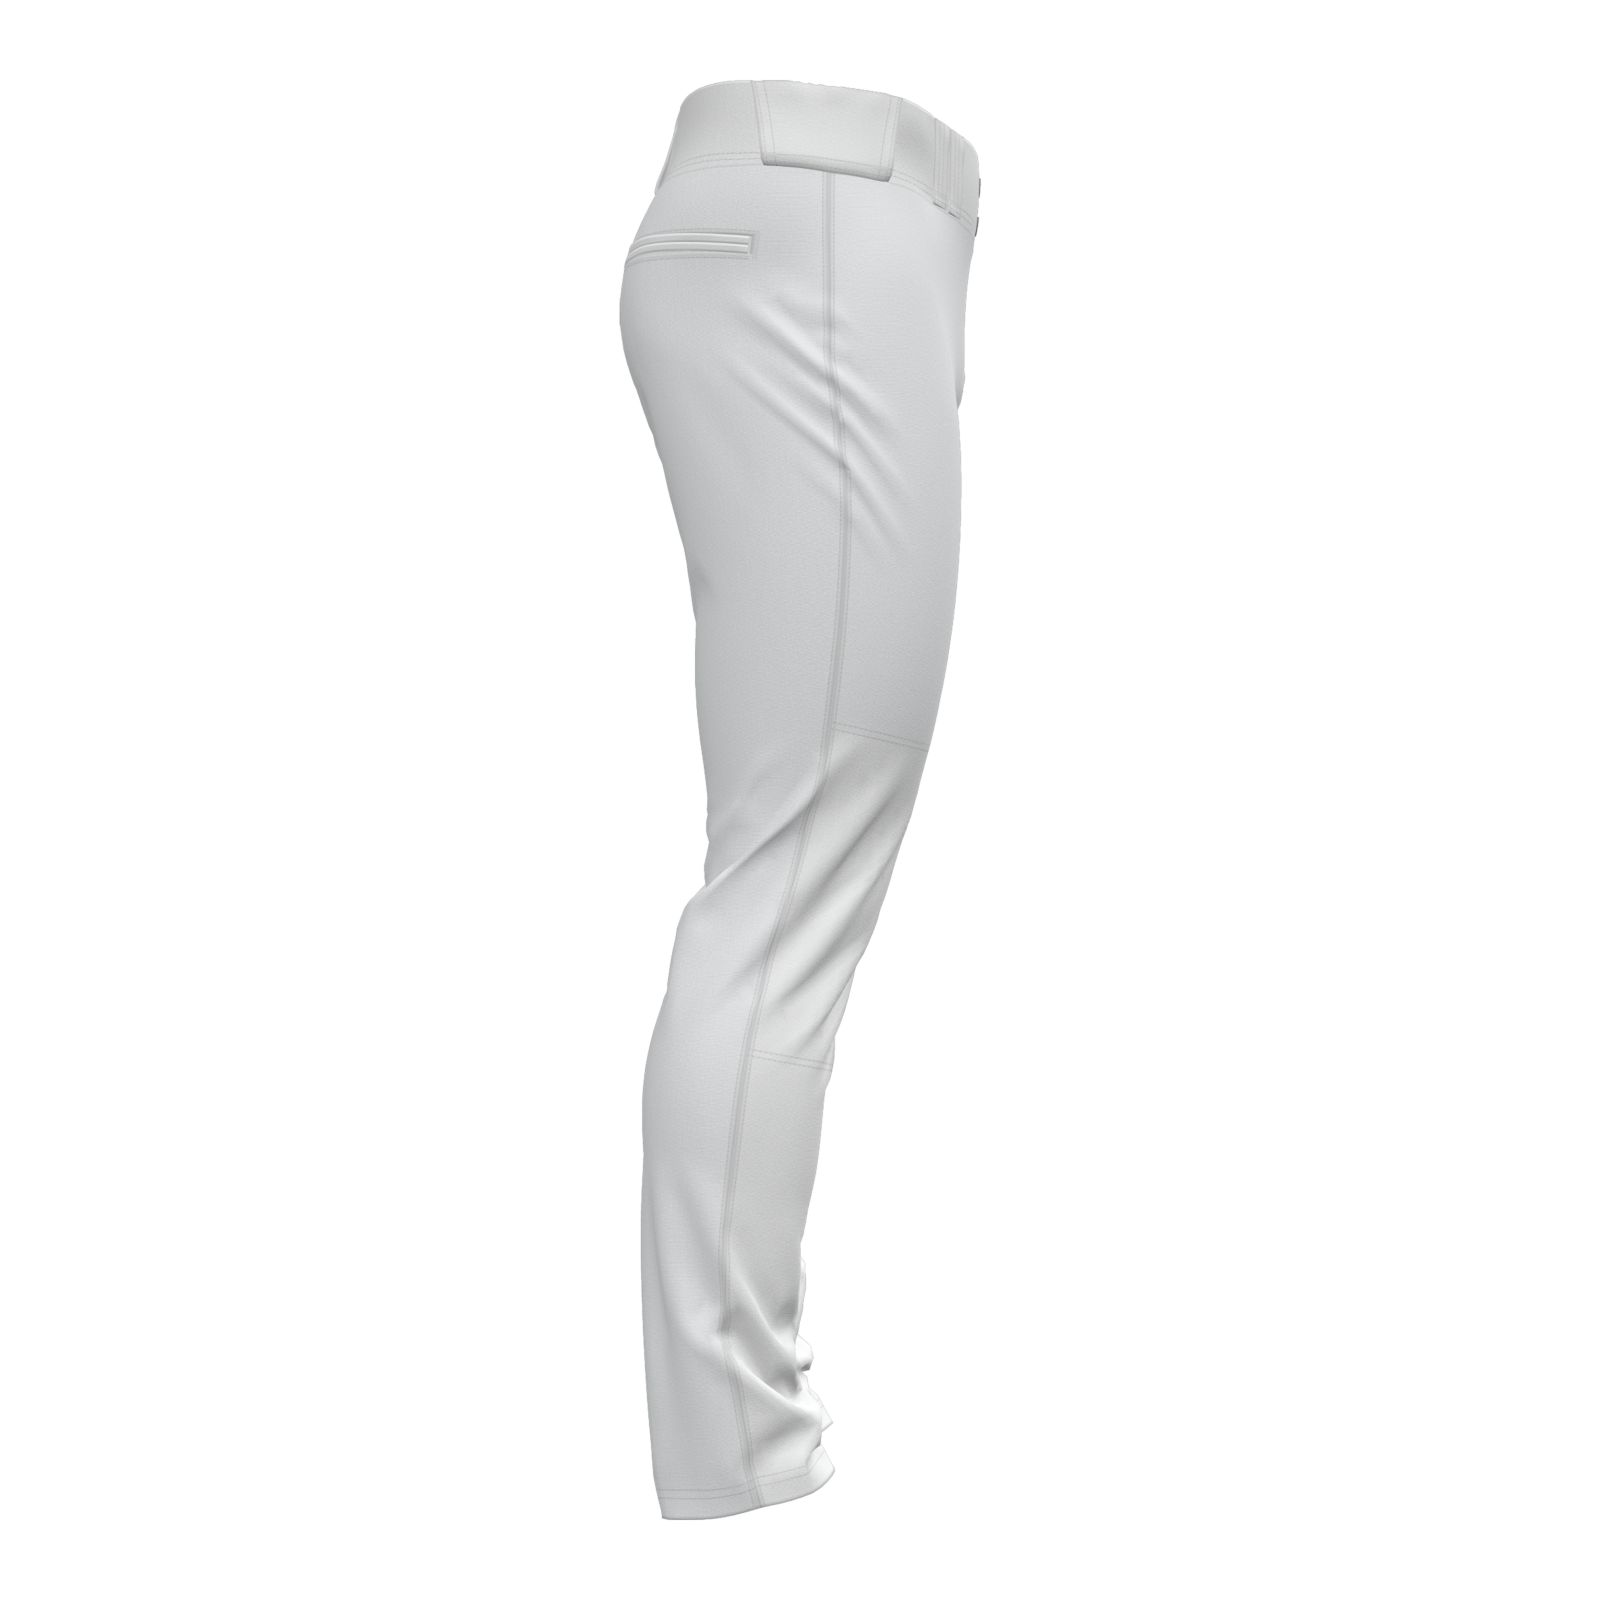 New Balance Men's Adversary 2 Baseball Solid Tapered Pants, White / XL